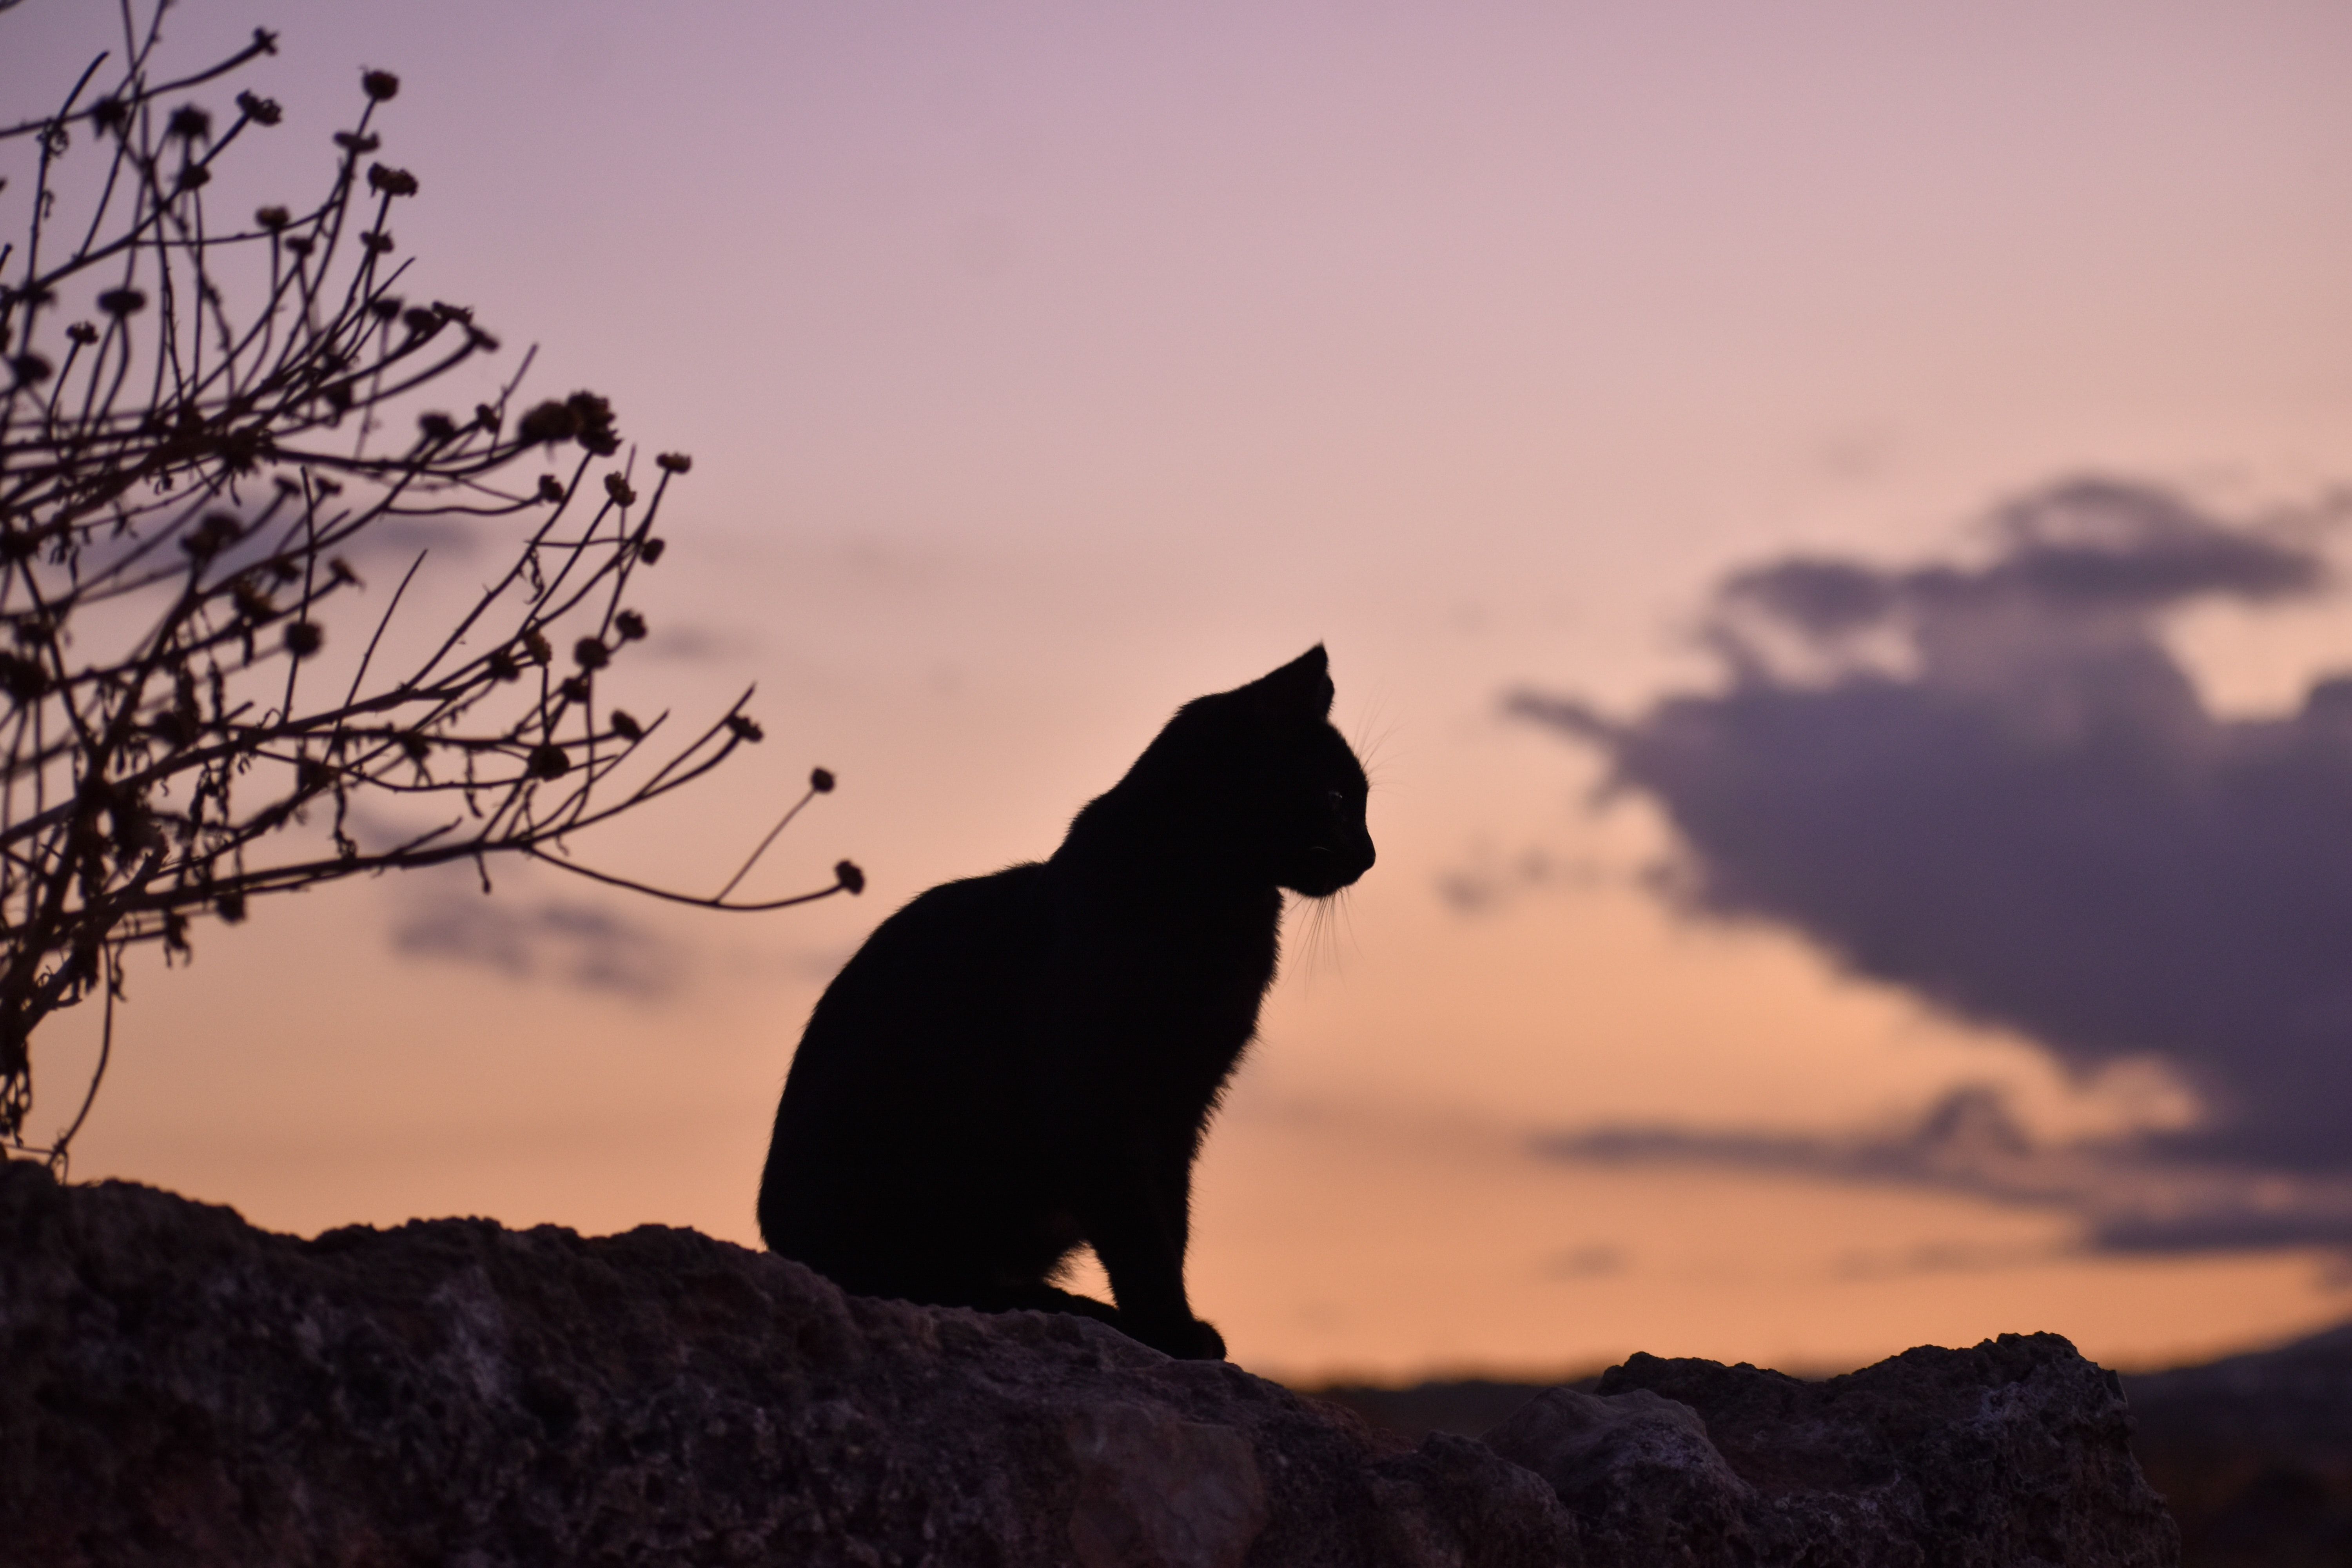 Dianggap Bawa Hoki, Berikut 7 Fakta Menarik Kucing Hitam